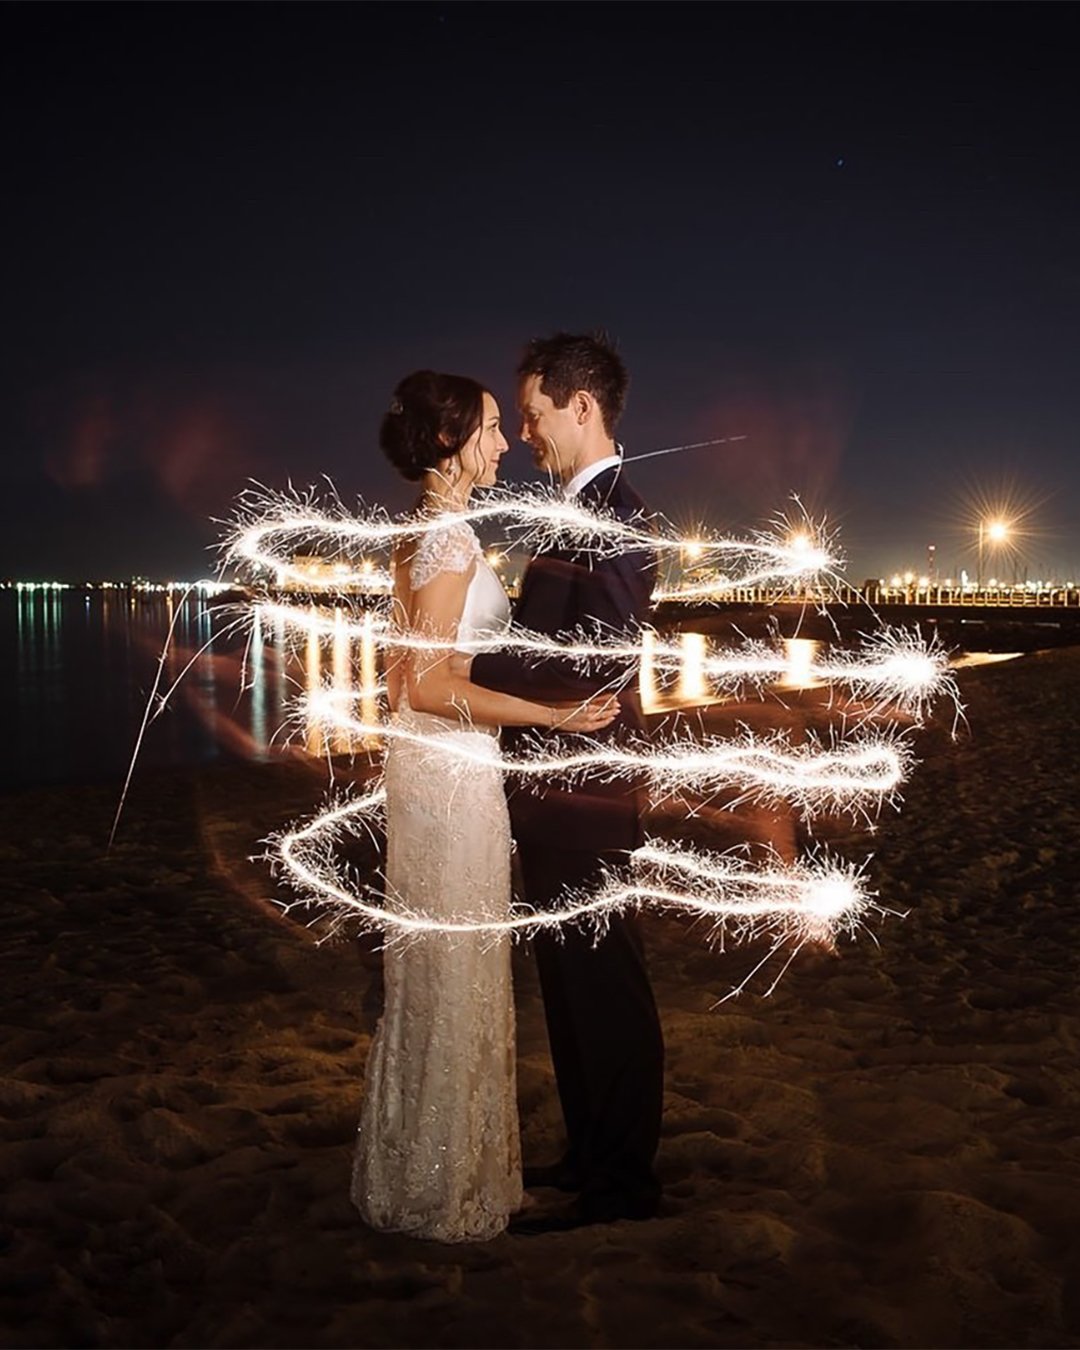 popular wedding photo ideas couple in fireworks jeromecole